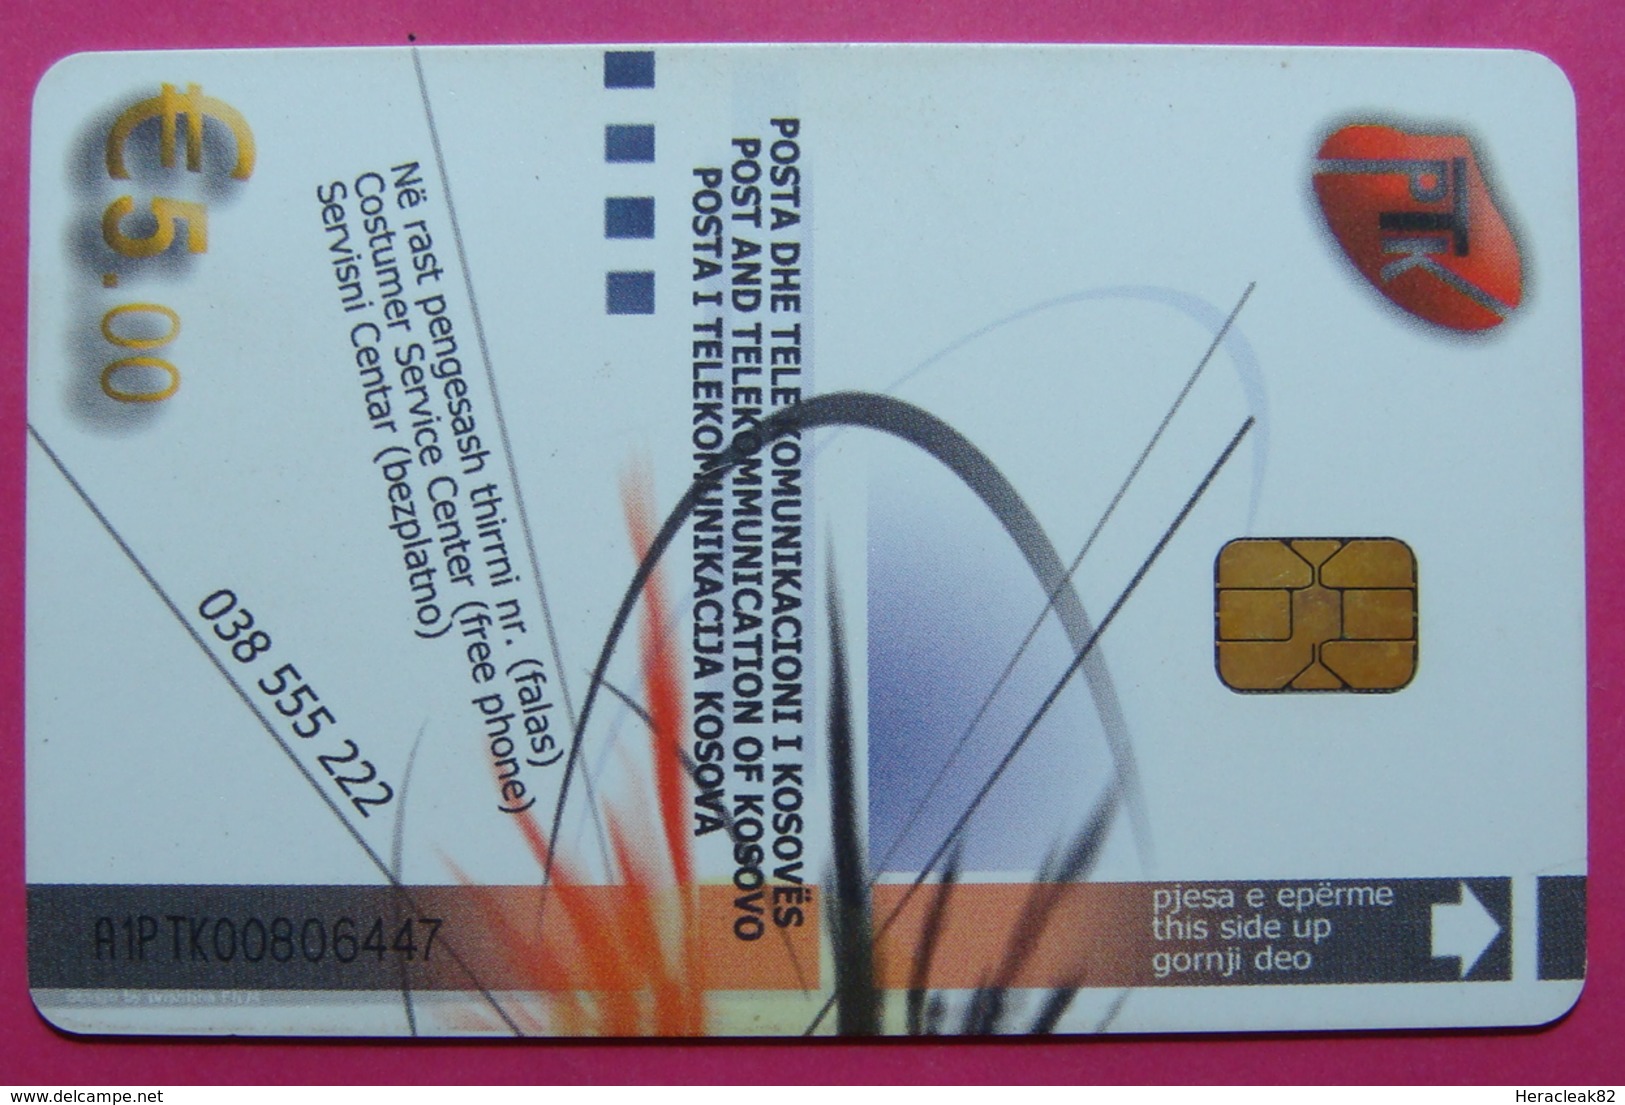 10 Edition Kosovo CHIP Phonecard, 5 Euro. Operator VALA, *Cifteli Turkish Instrument*, RARE, A1PTK 00806447 - Kosovo